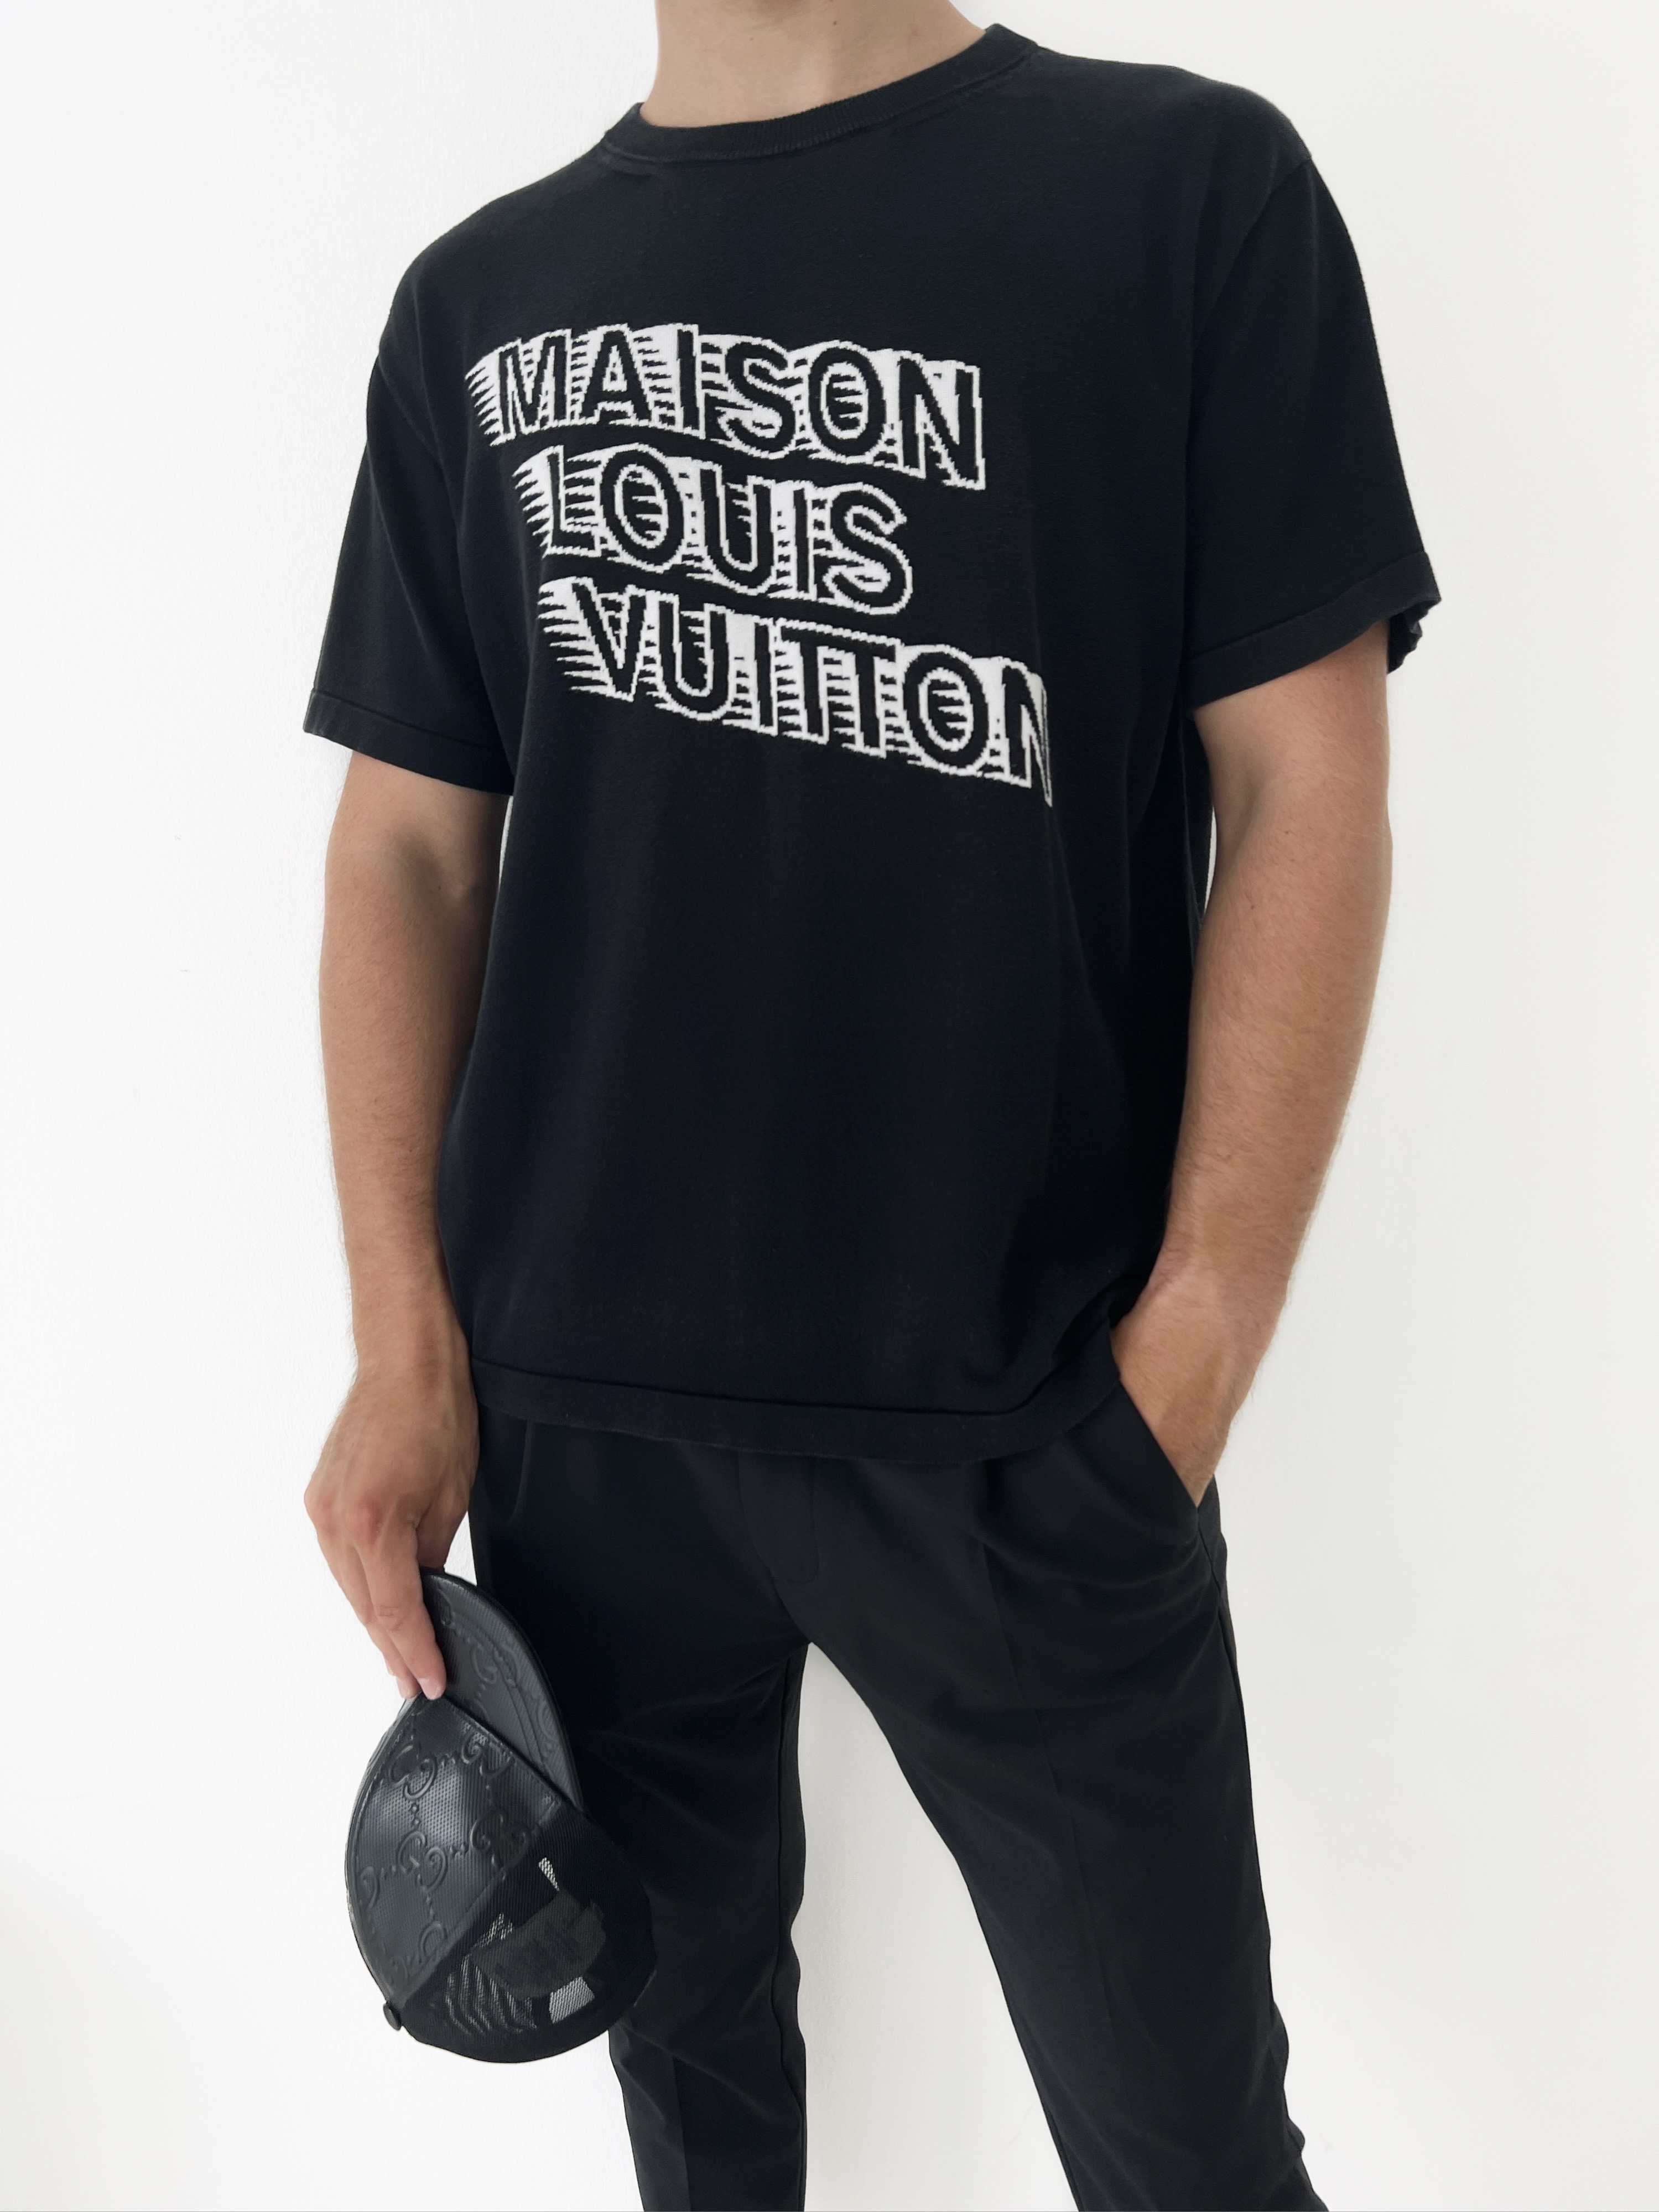 Maison L V crewneck black white Mens Fashion Tops  Sets Tshirts  Polo  Shirts on Carousell